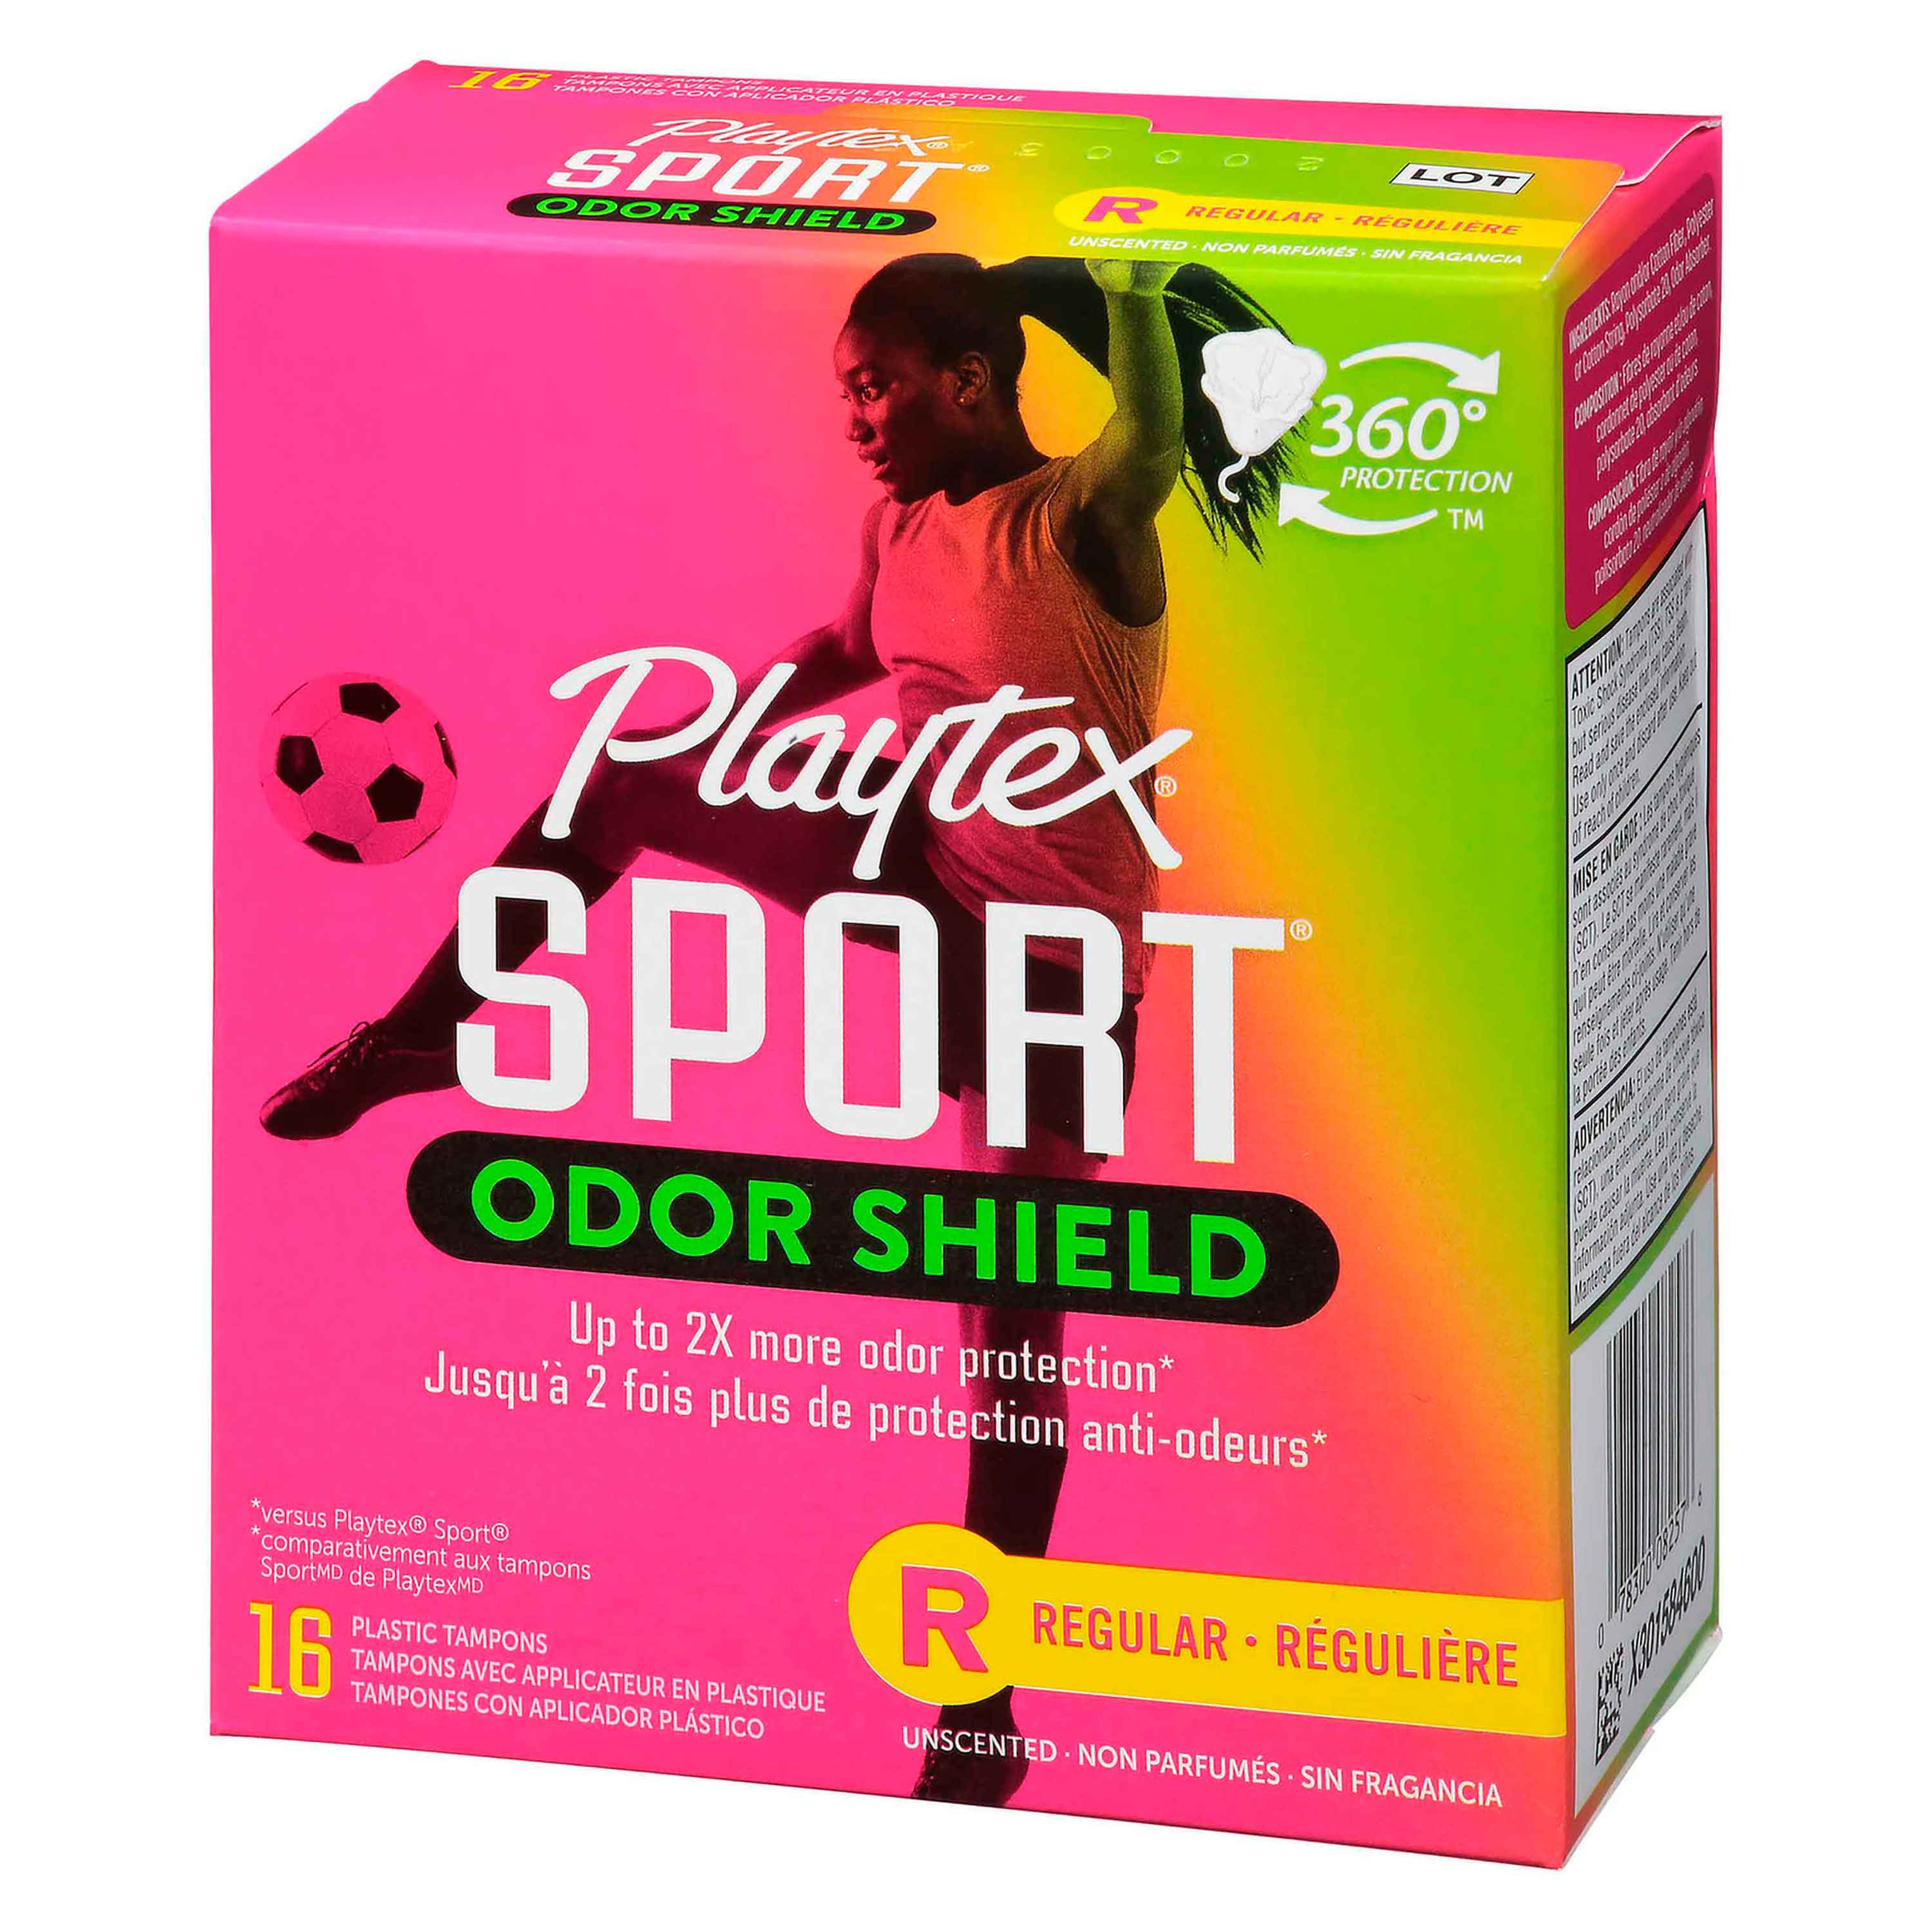 Playtex Sport Odor Shield 16 1 23894 ?v=638055382196500000